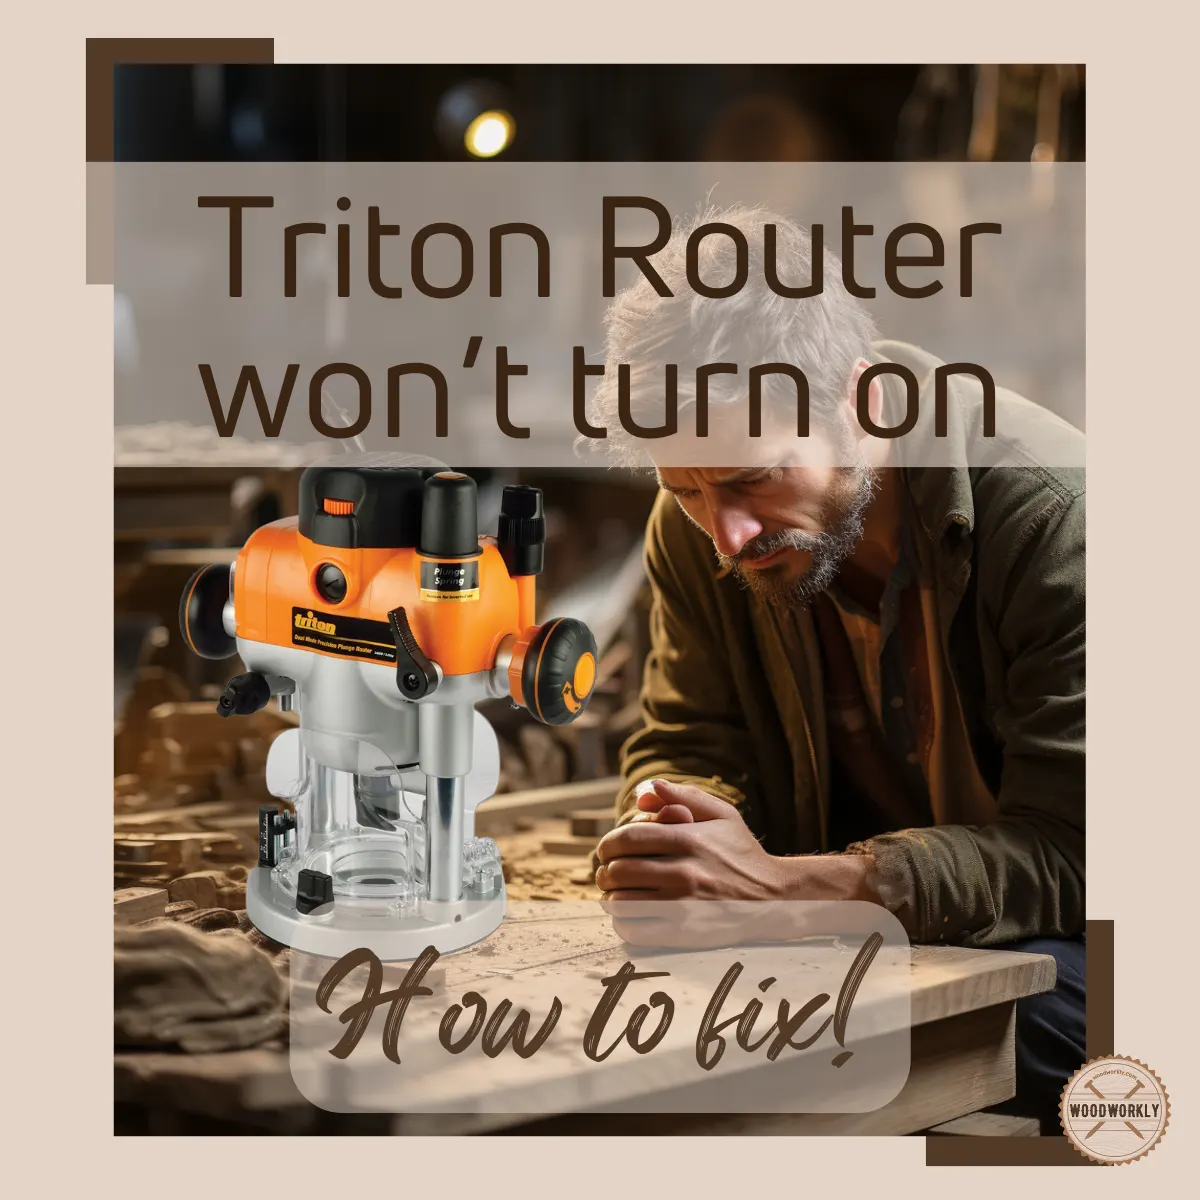 Triton Router won’t turn on